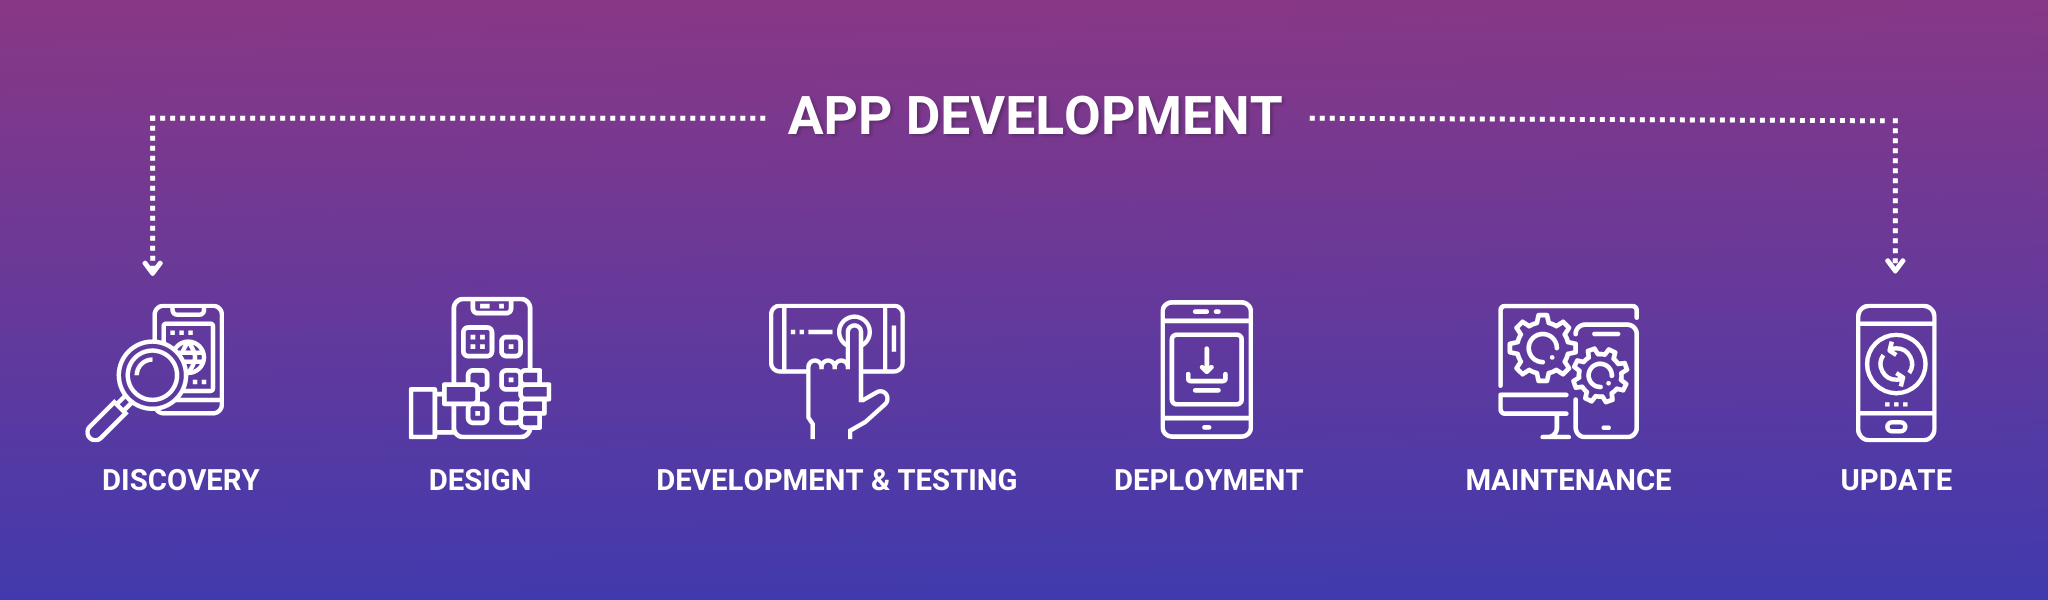 App Development Steps